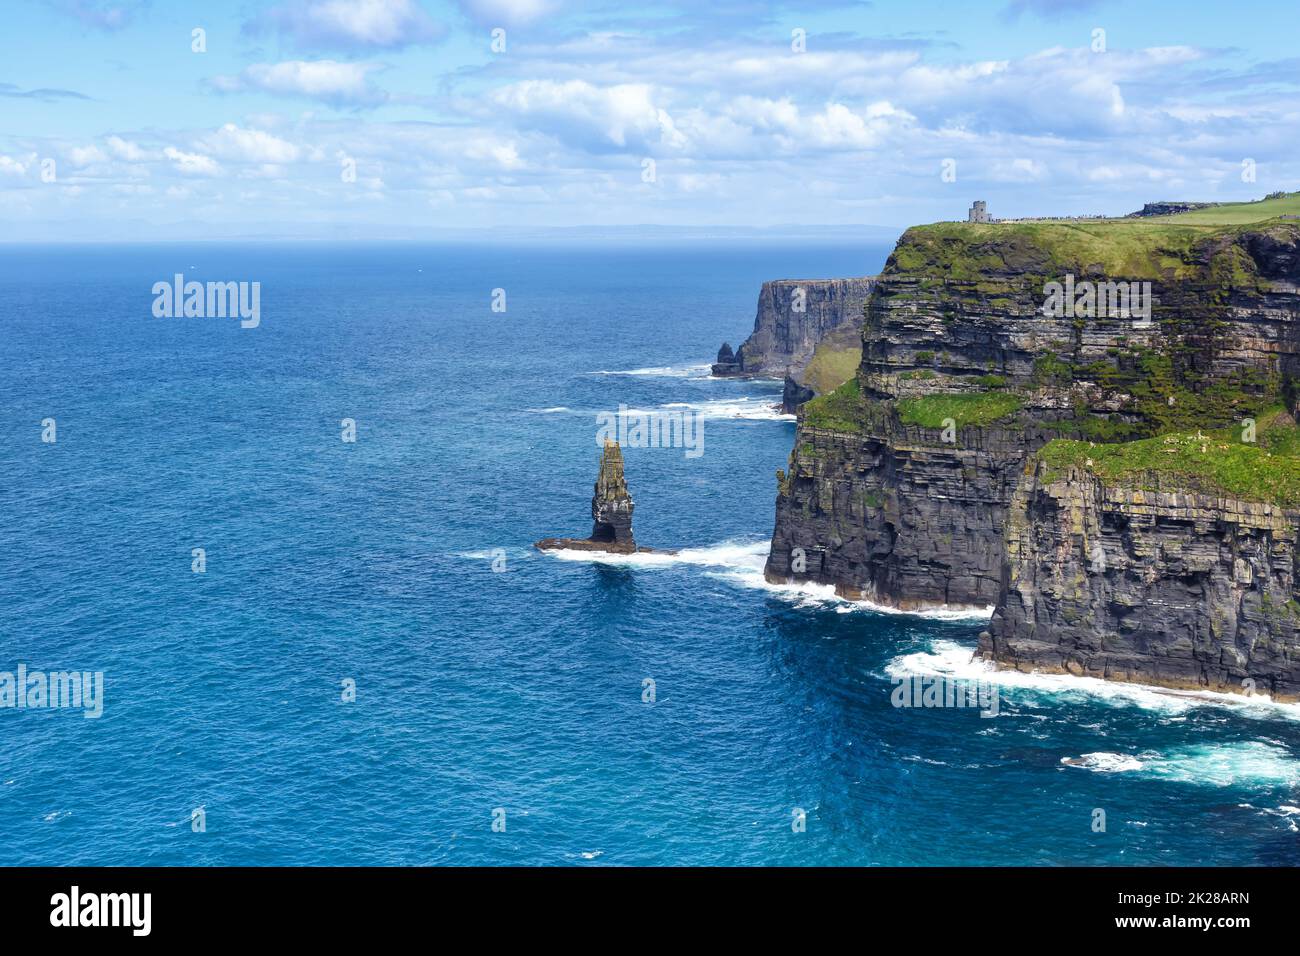 Irland Cliffs of Moher Reise Reise Kopierraum Atlantischer Ozean Meerestourismus Stockfoto